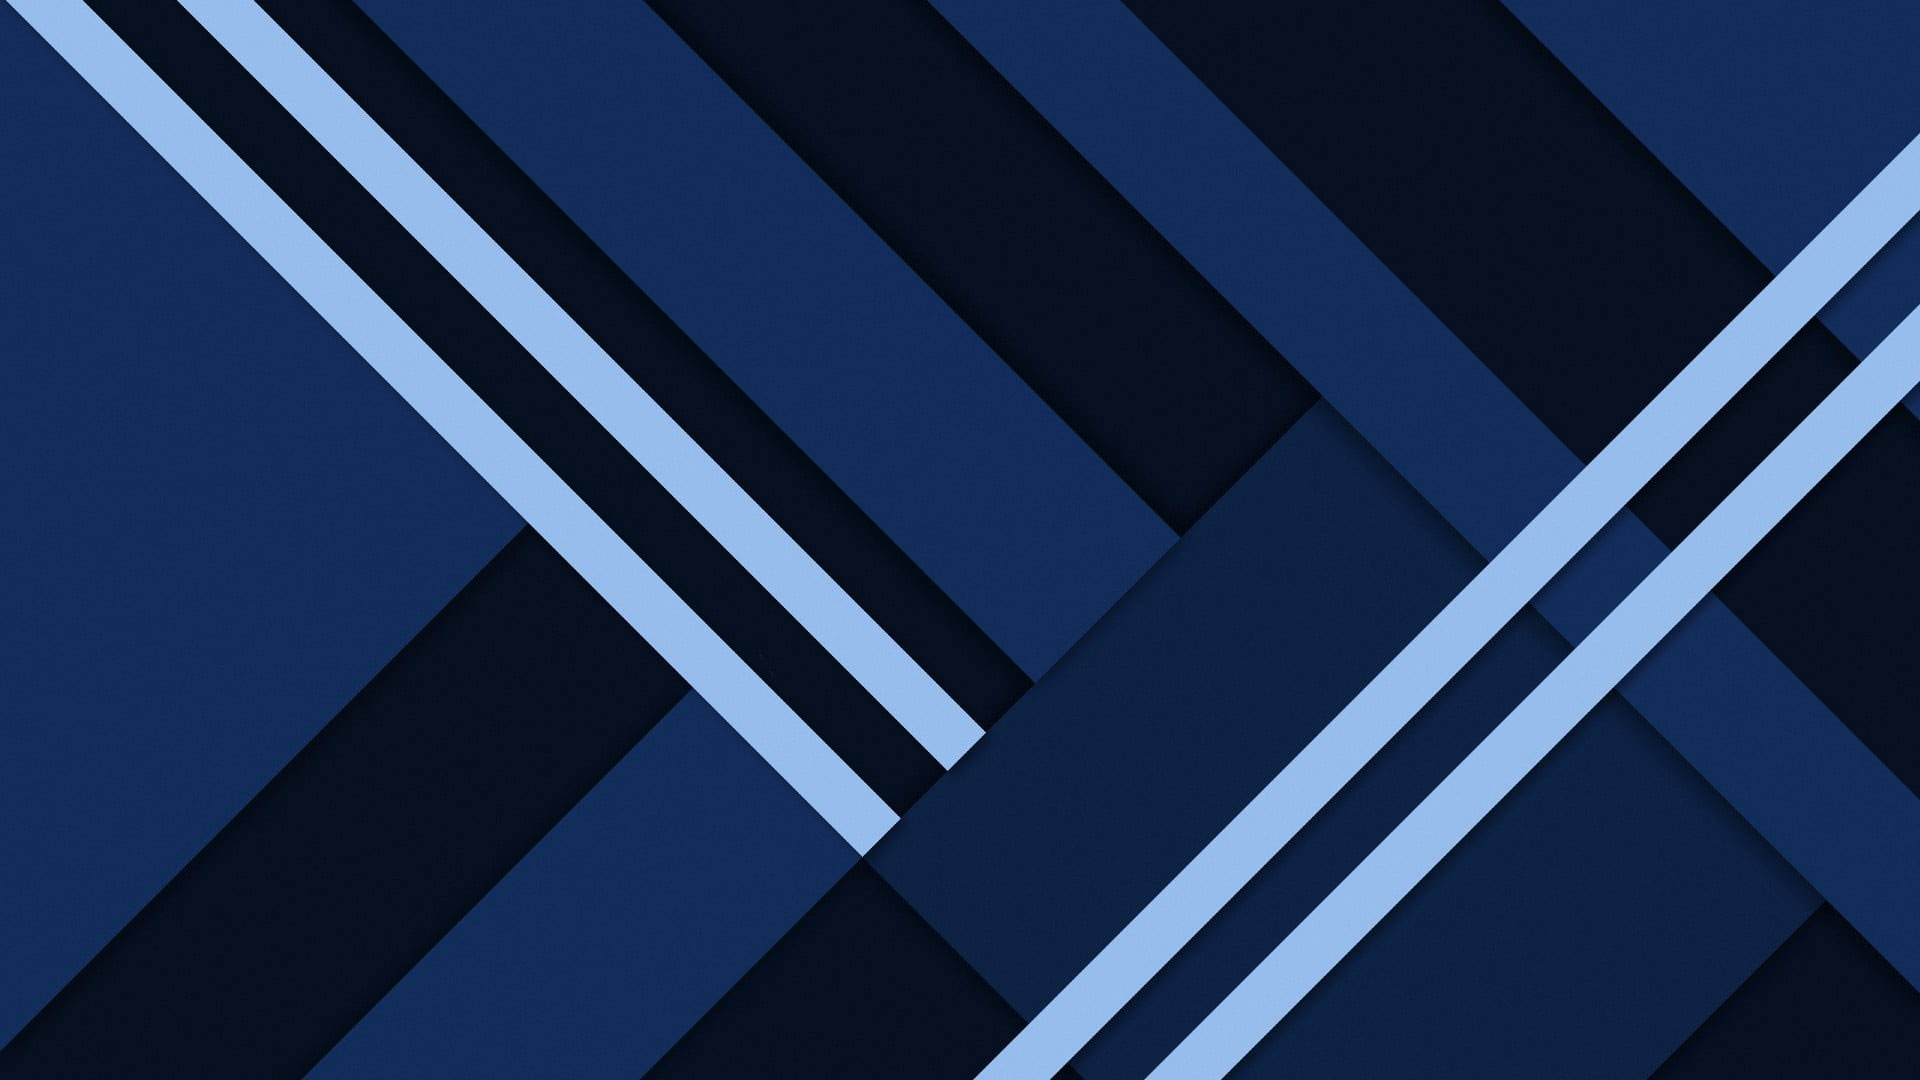 Material blue wallpaper, material design, minimal art, minimalist, graphics